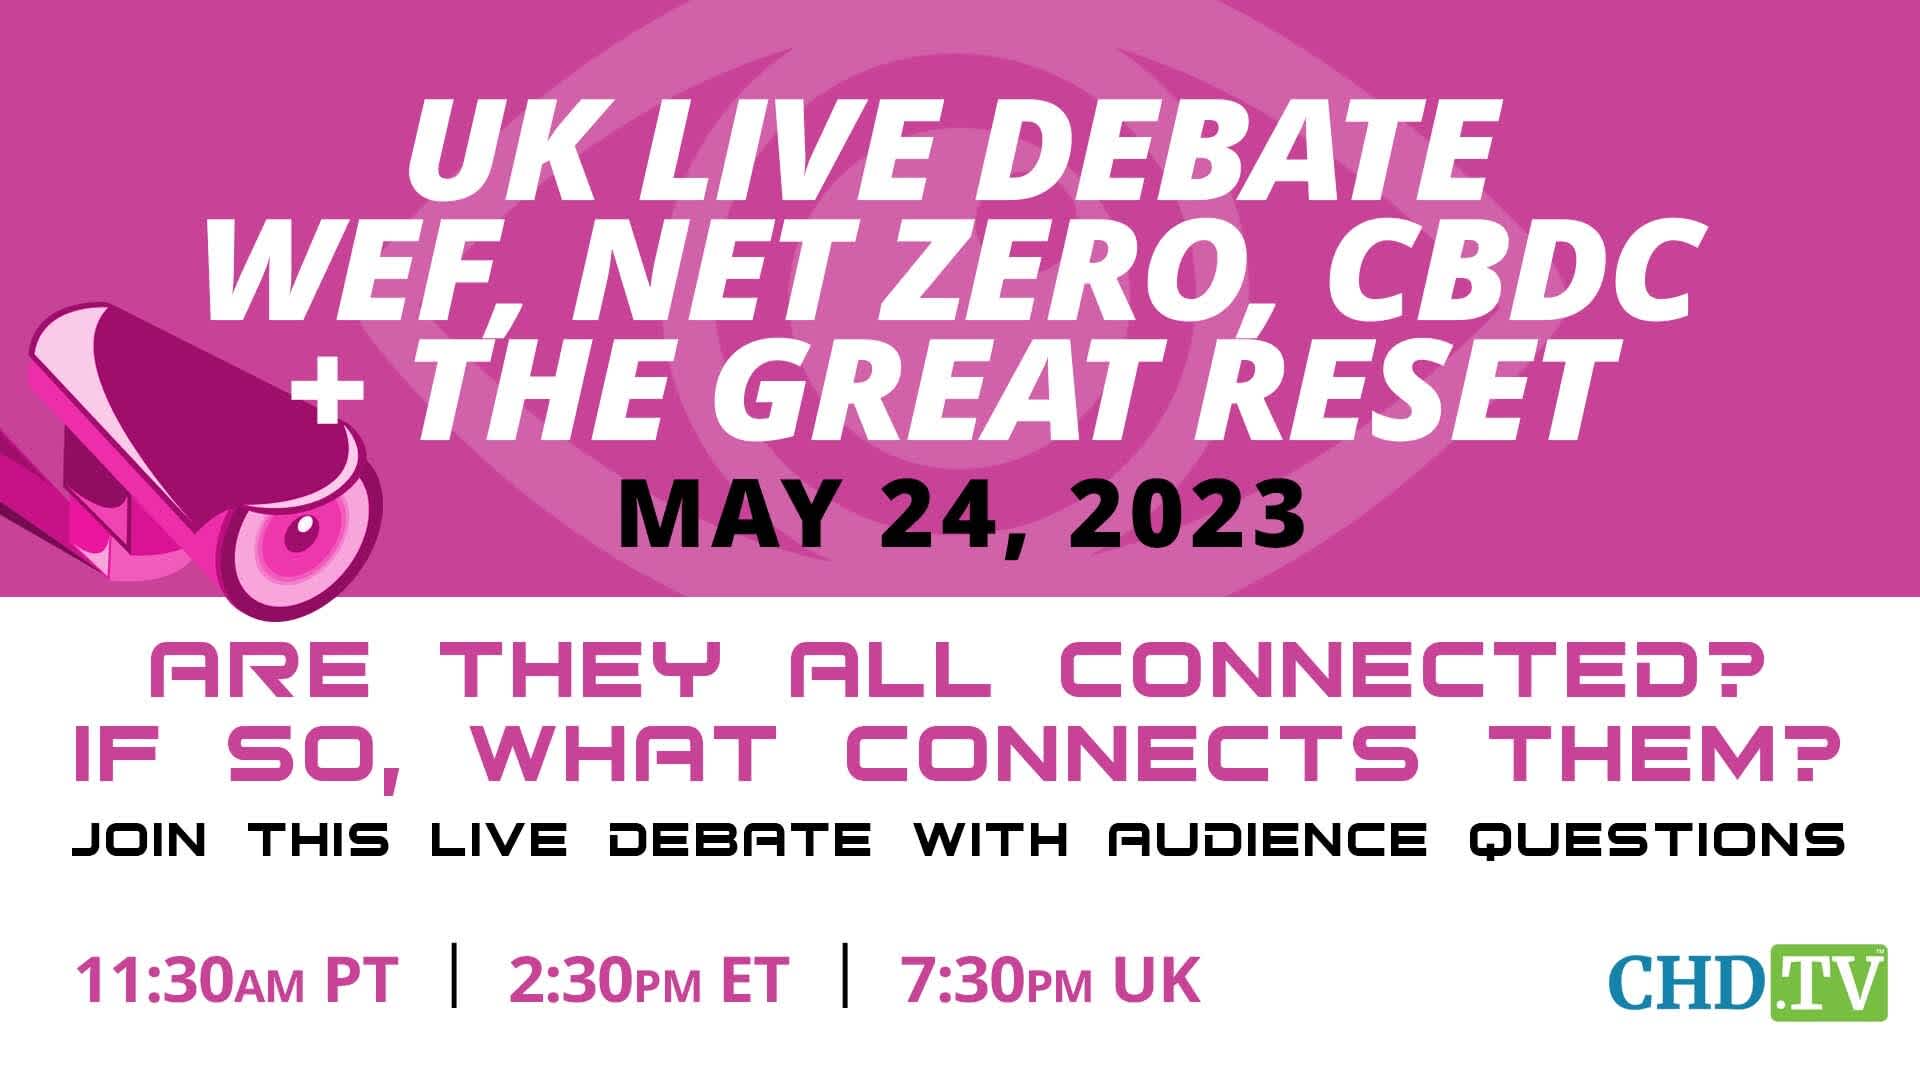 UK Live Debate WEF, Net Zero, CBDC + The Great Reset | May 24, 2023 | 11:30am PT | 2:30pm ET | 7:30pm UK